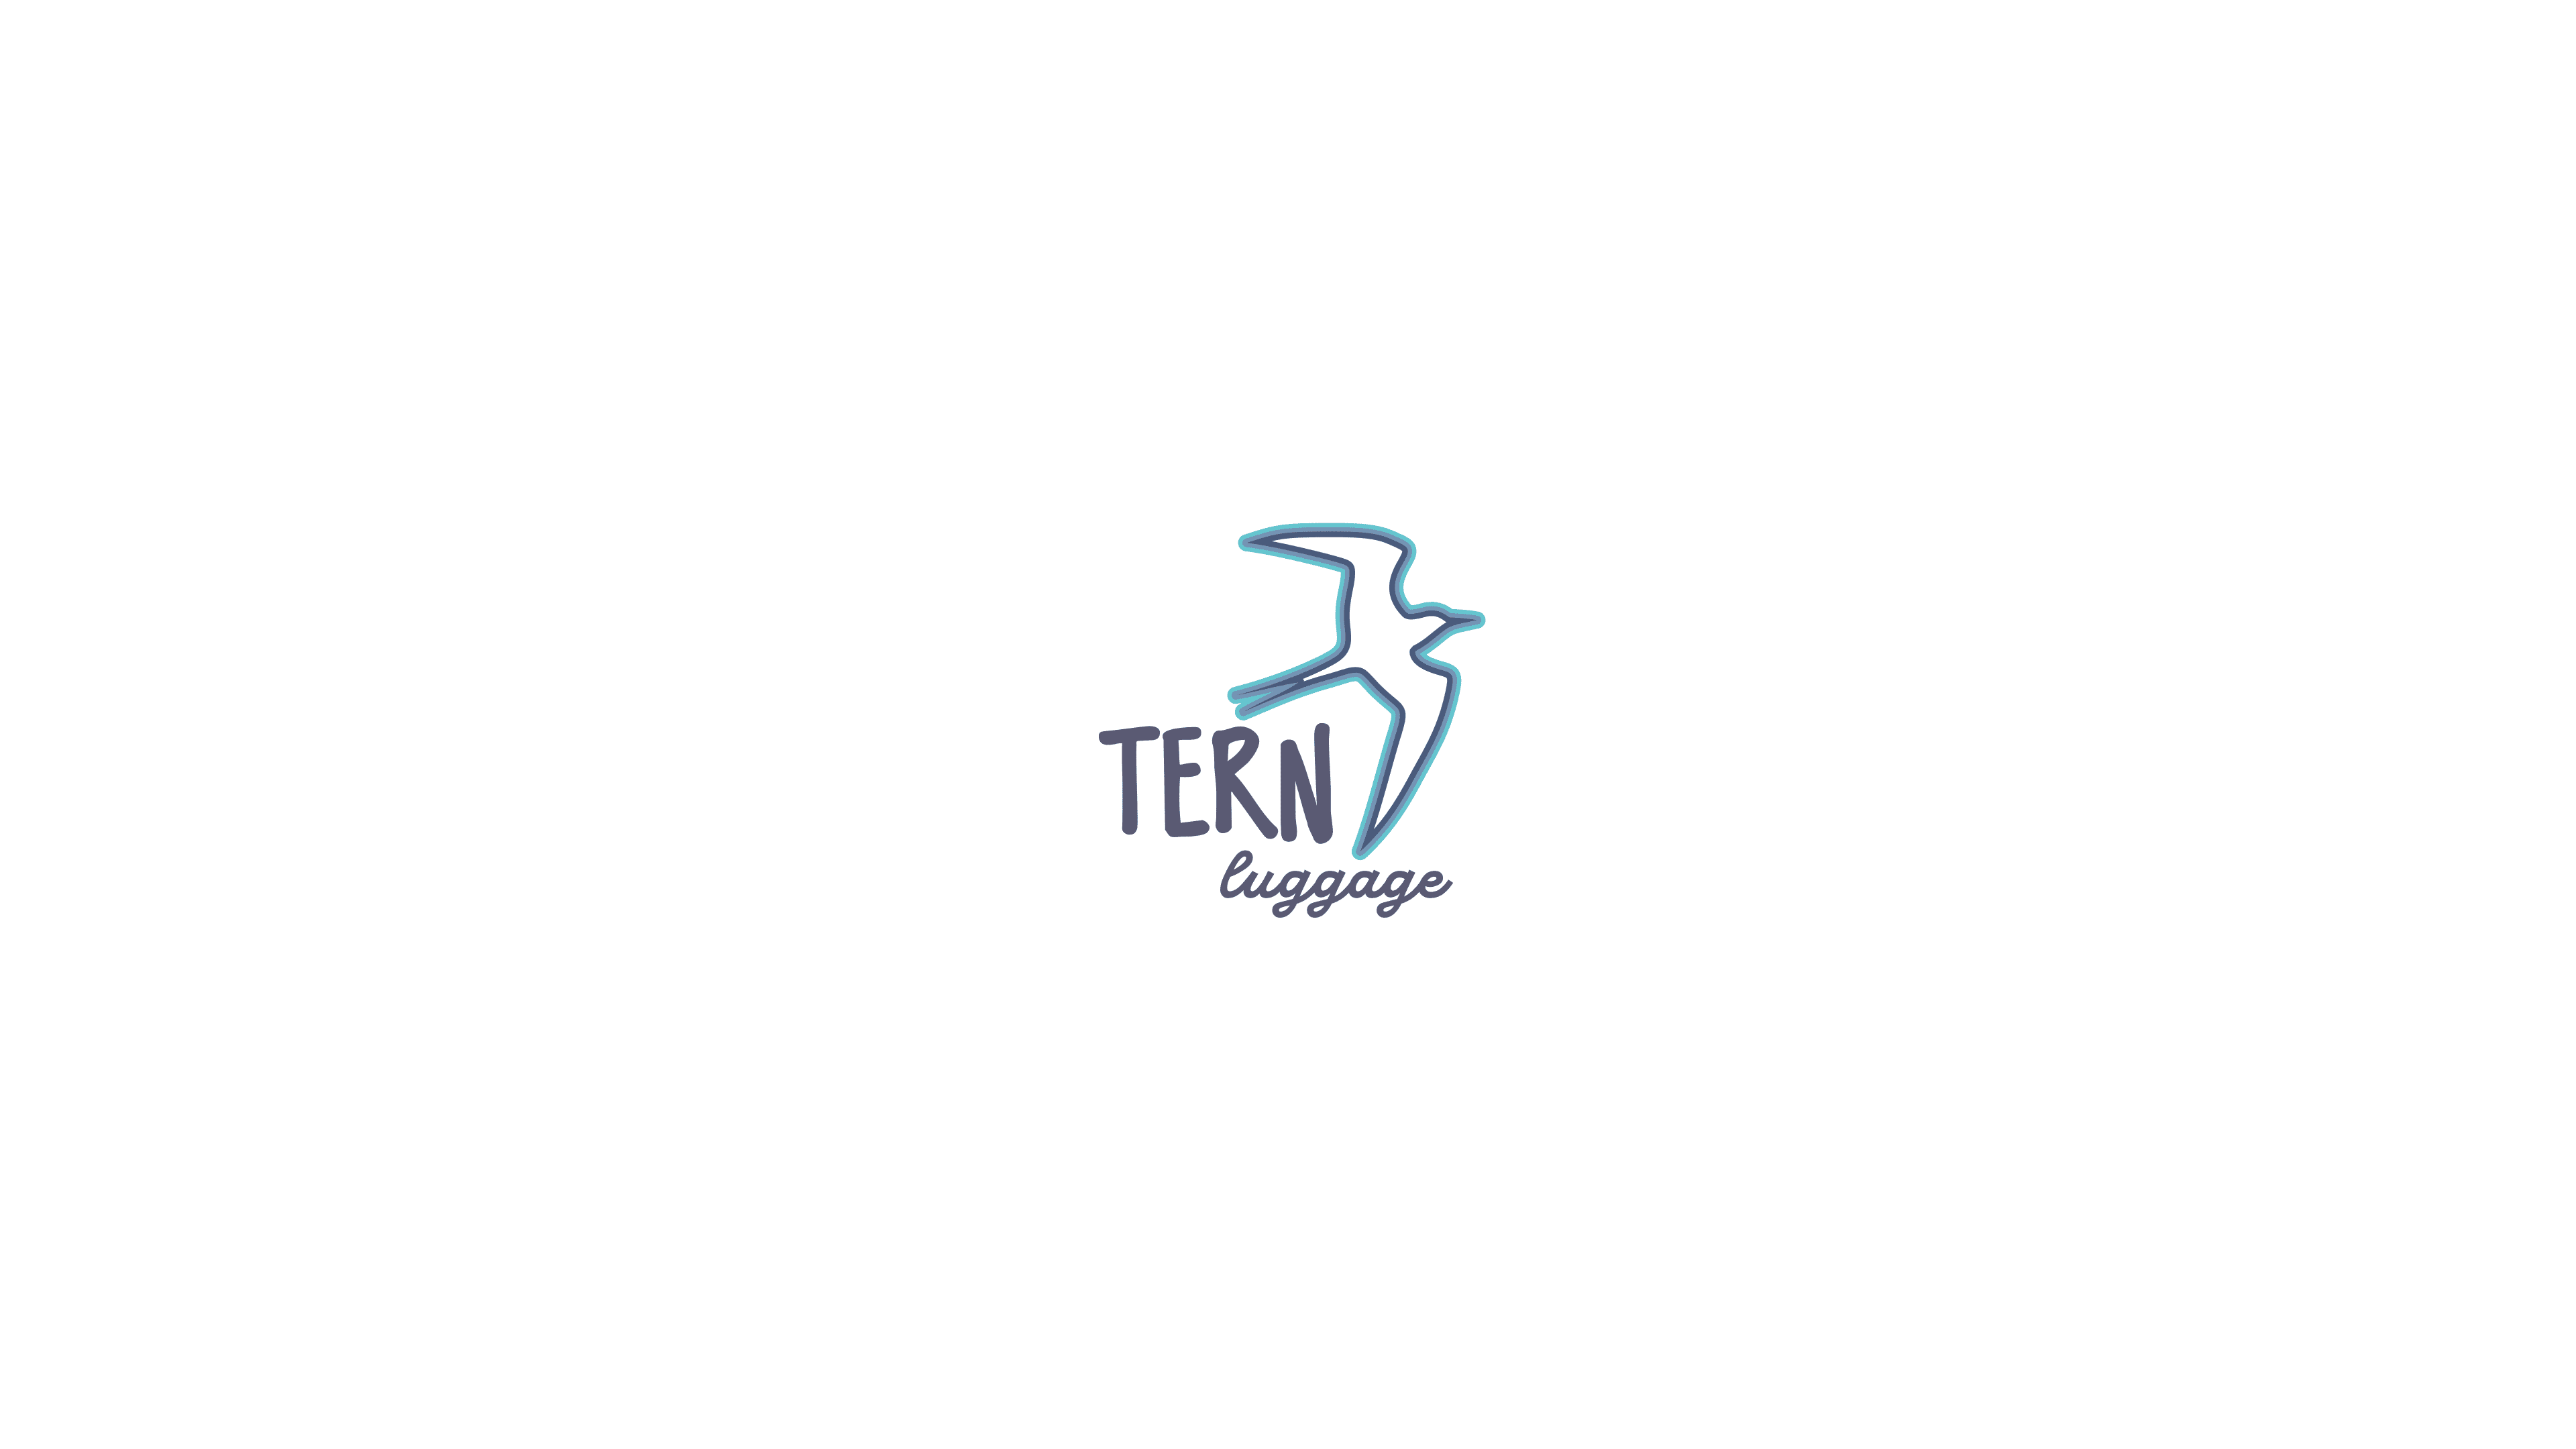 Tern luggage logo